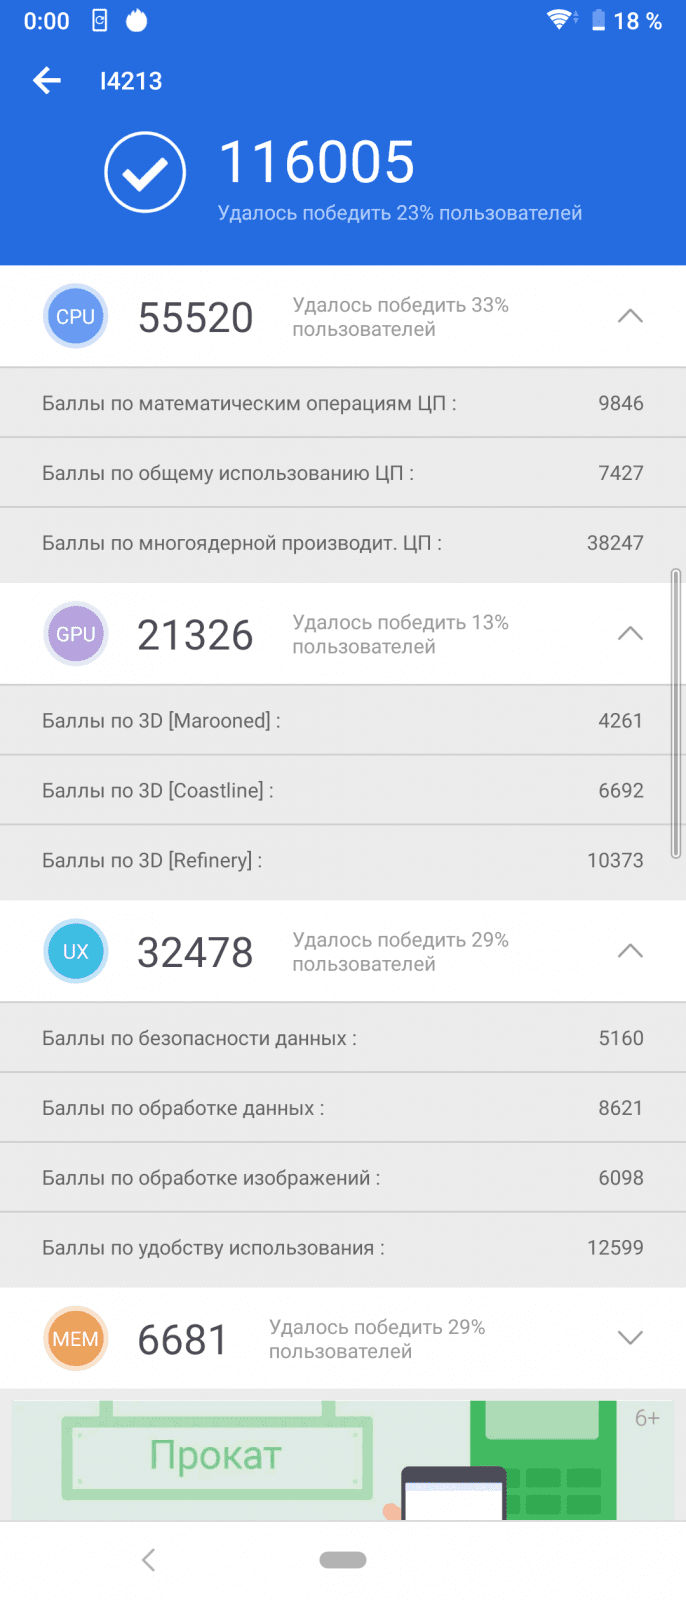 Обзор cмартфона Sony Xperia 10 Plus. Лучше поздно, чем никогда (screenshot 20190422 000020)